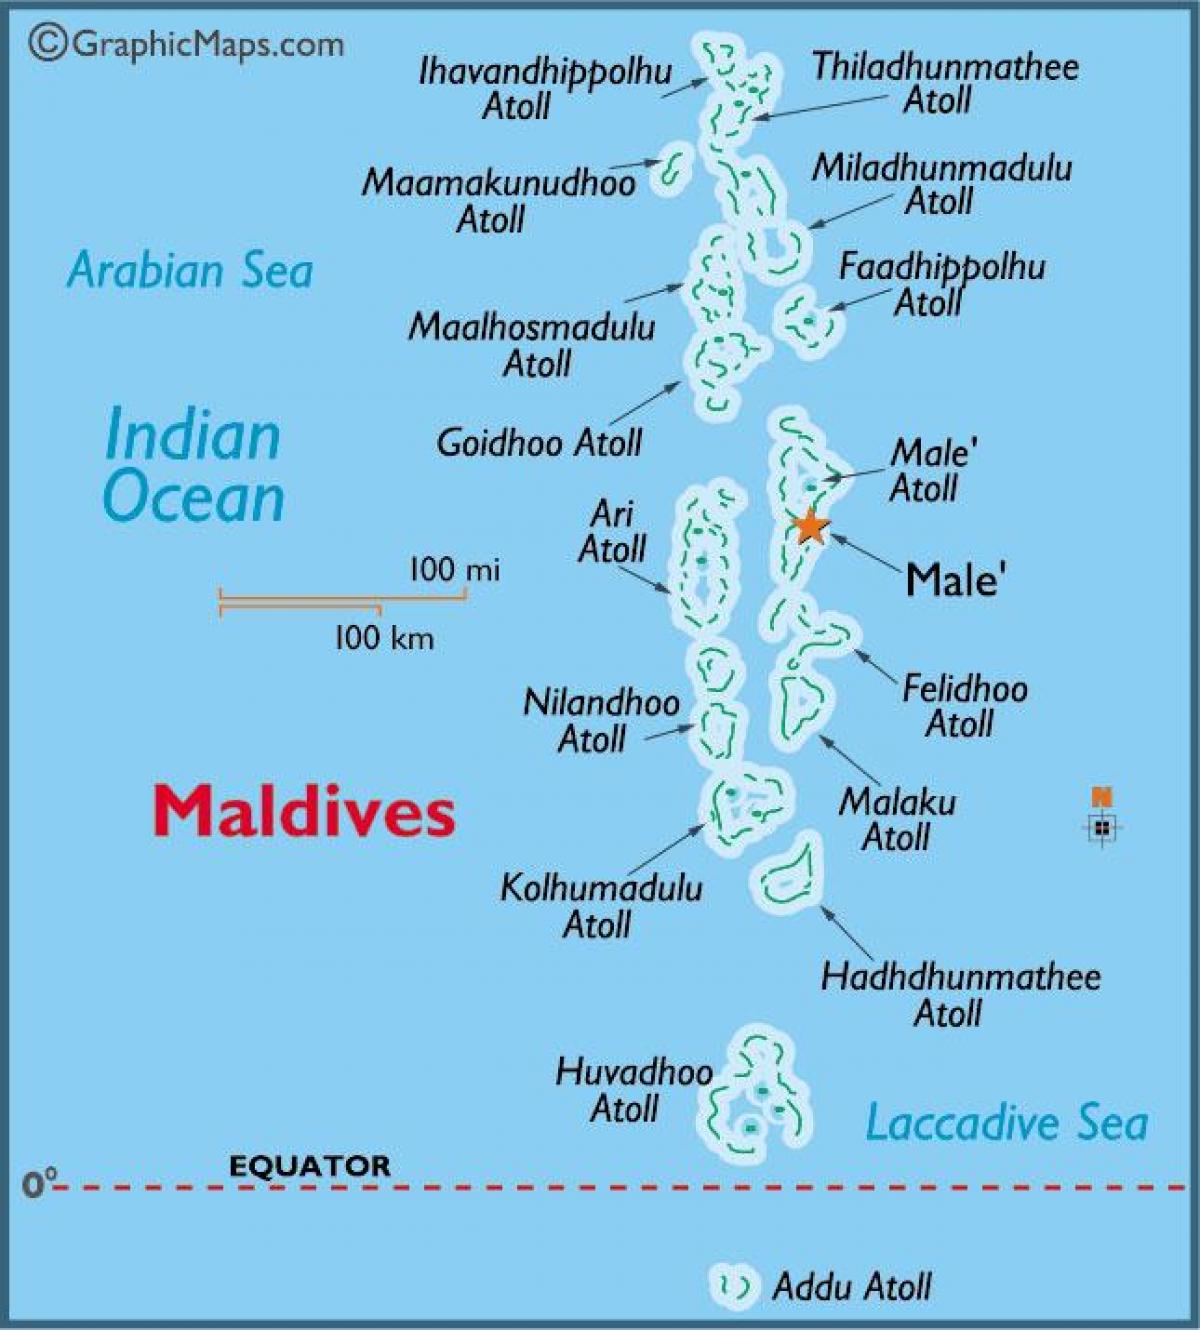 baa atoll, maladewa peta